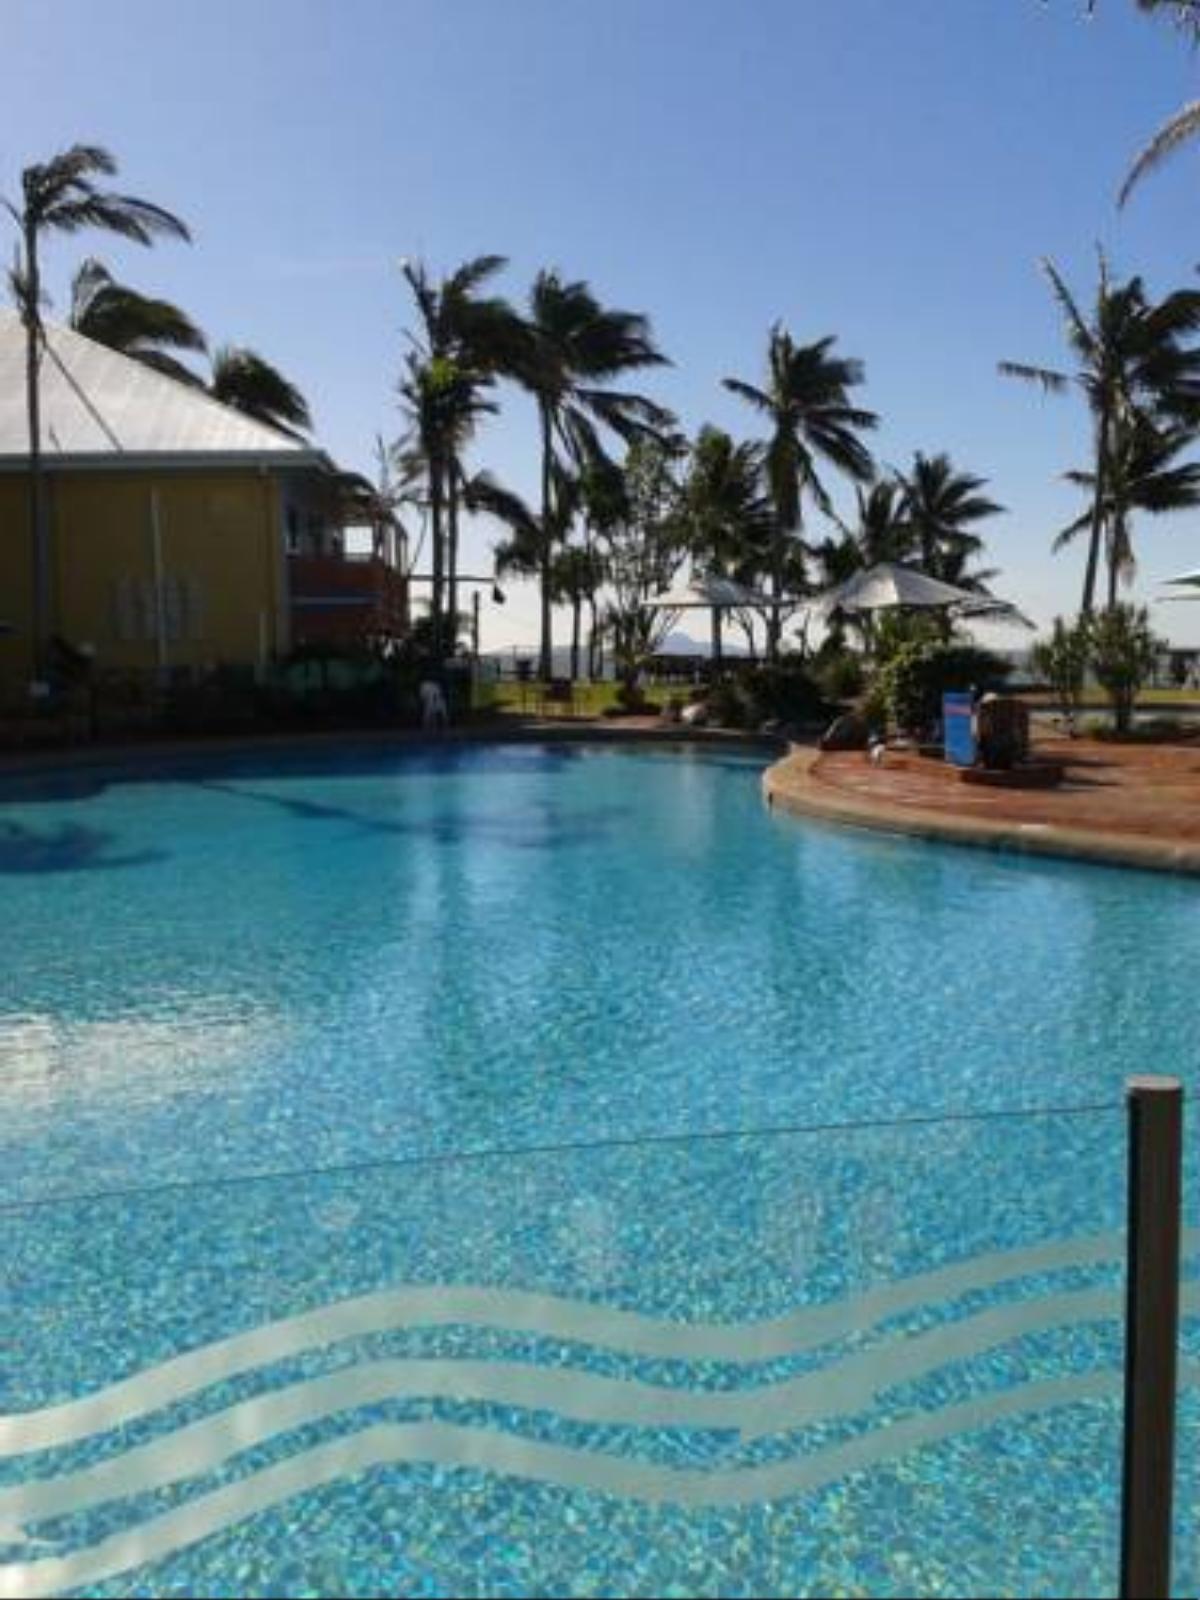 Apartment in Dolphin Heads Resort Hotel Eimeo Australia